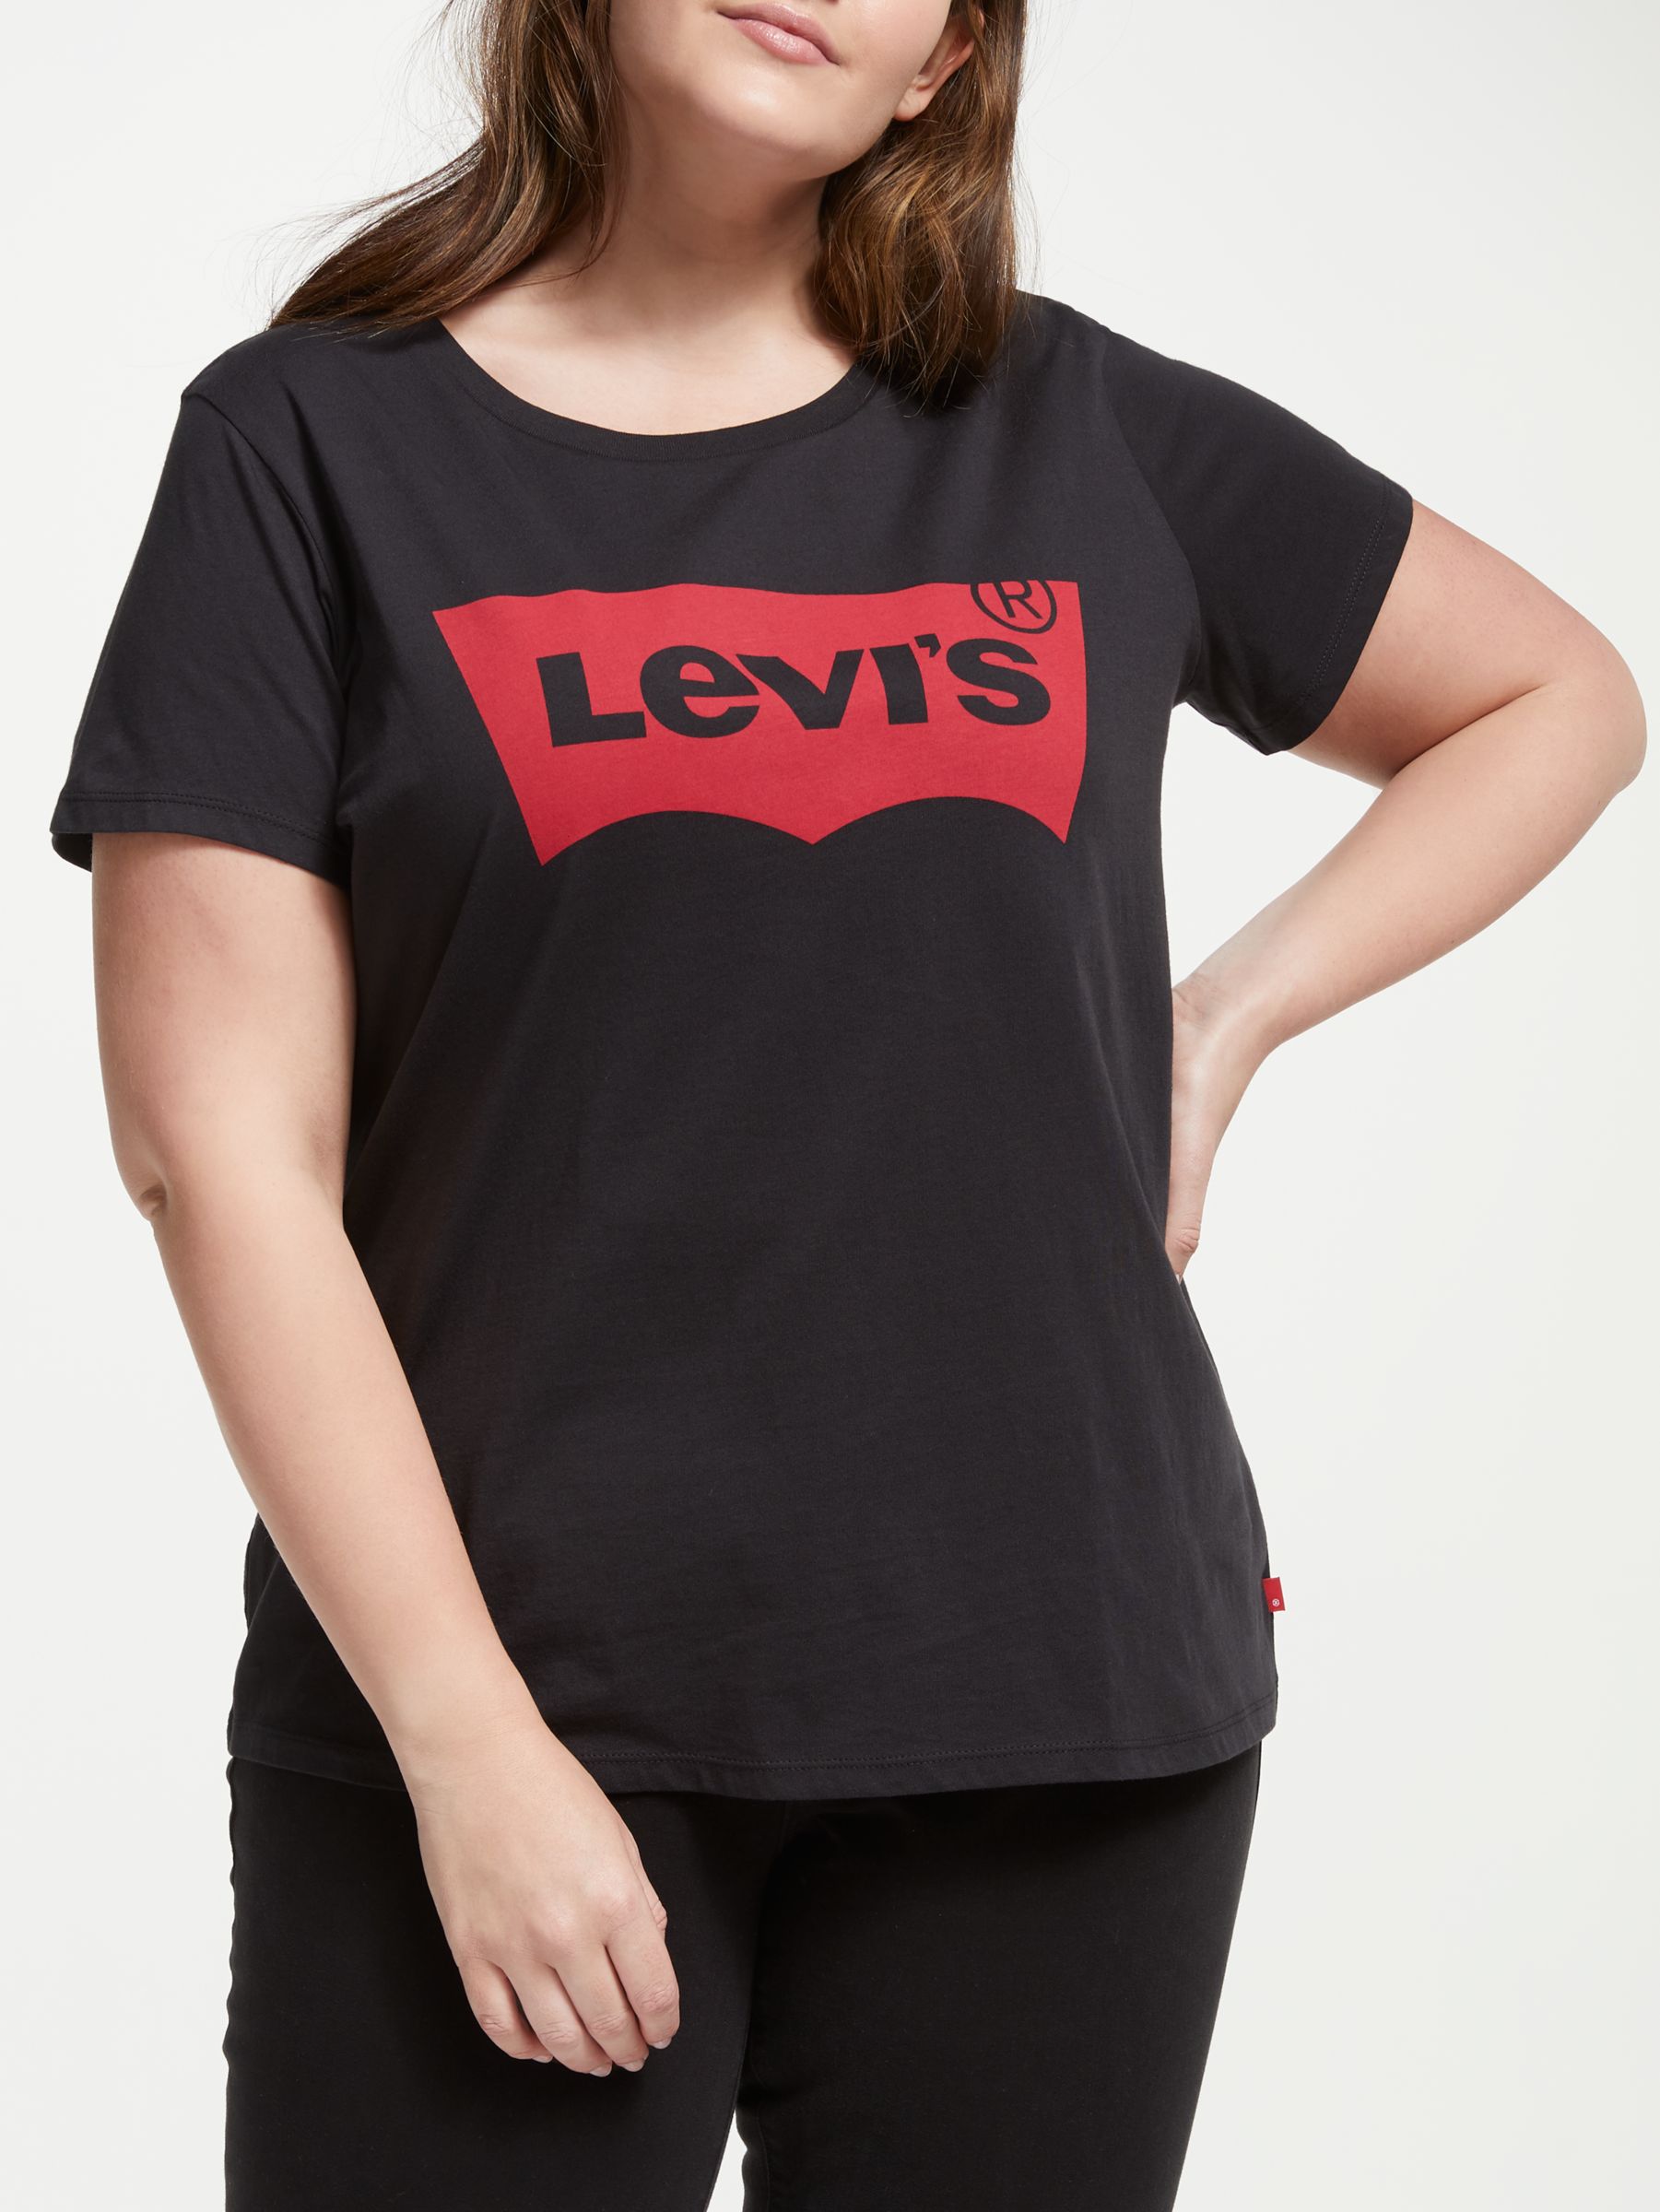 levis black logo t shirt